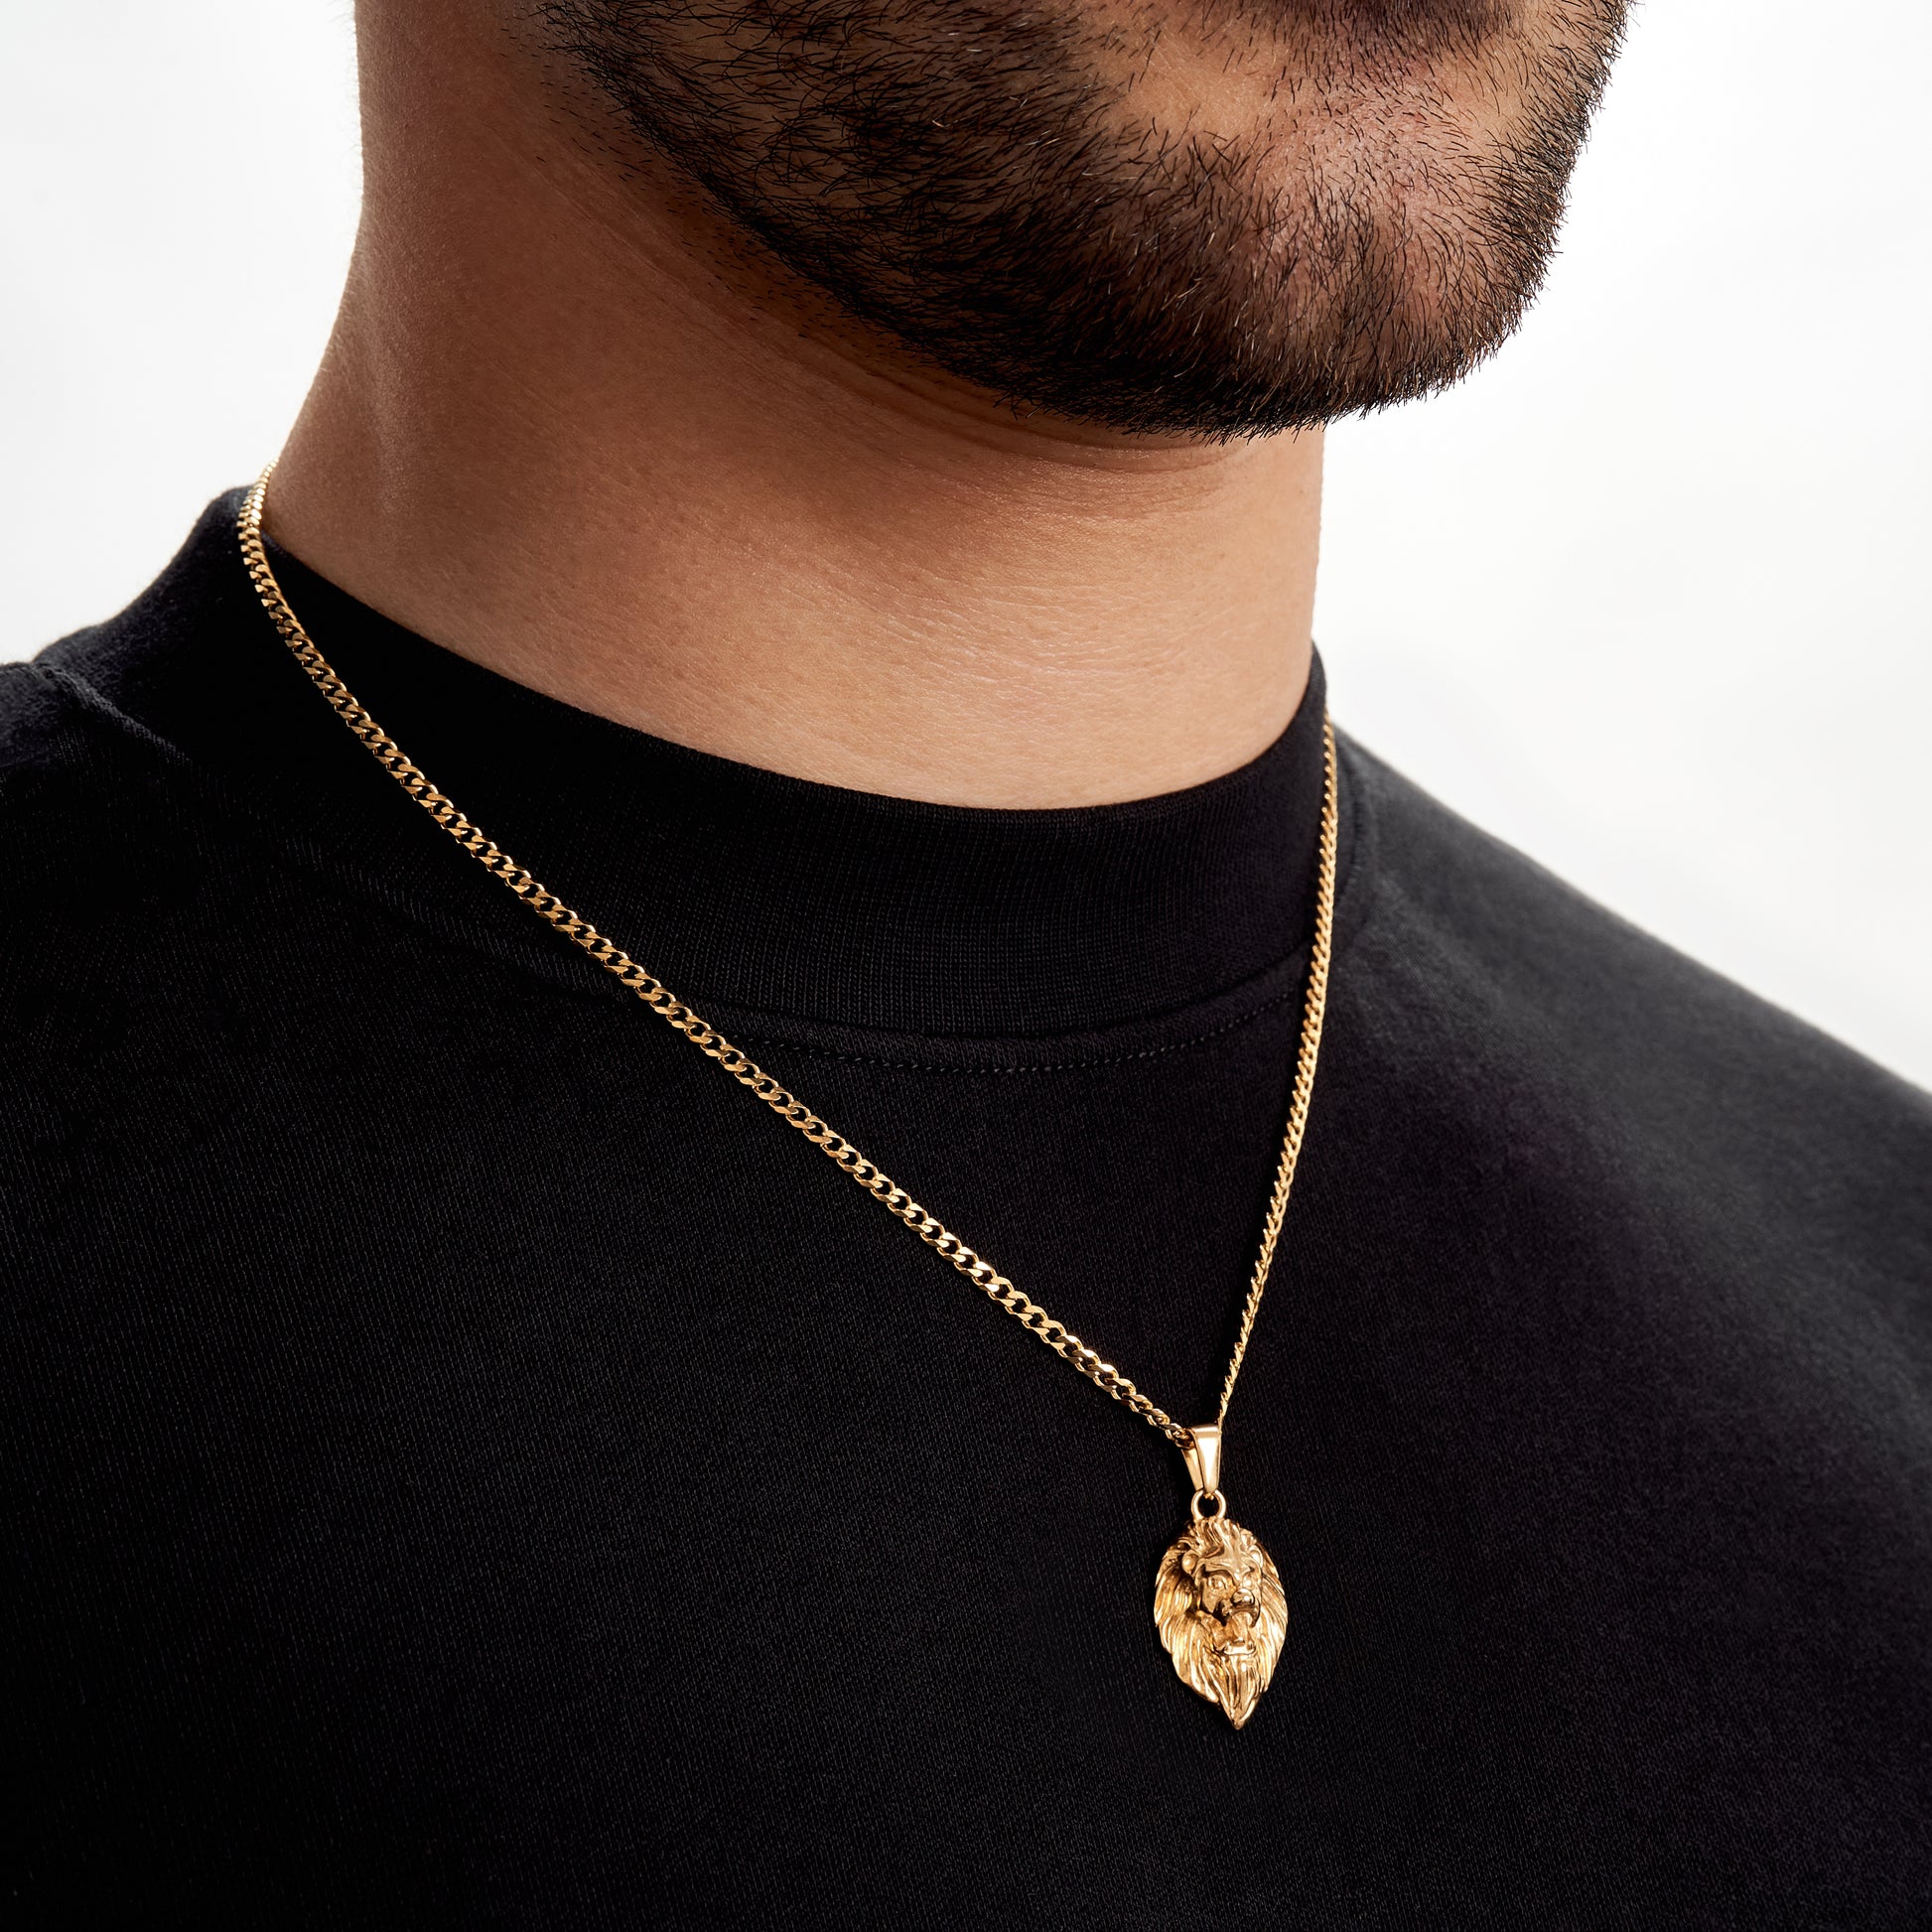 Gold Pendant Necklace Men's Lion Jewelry Apollo Untold